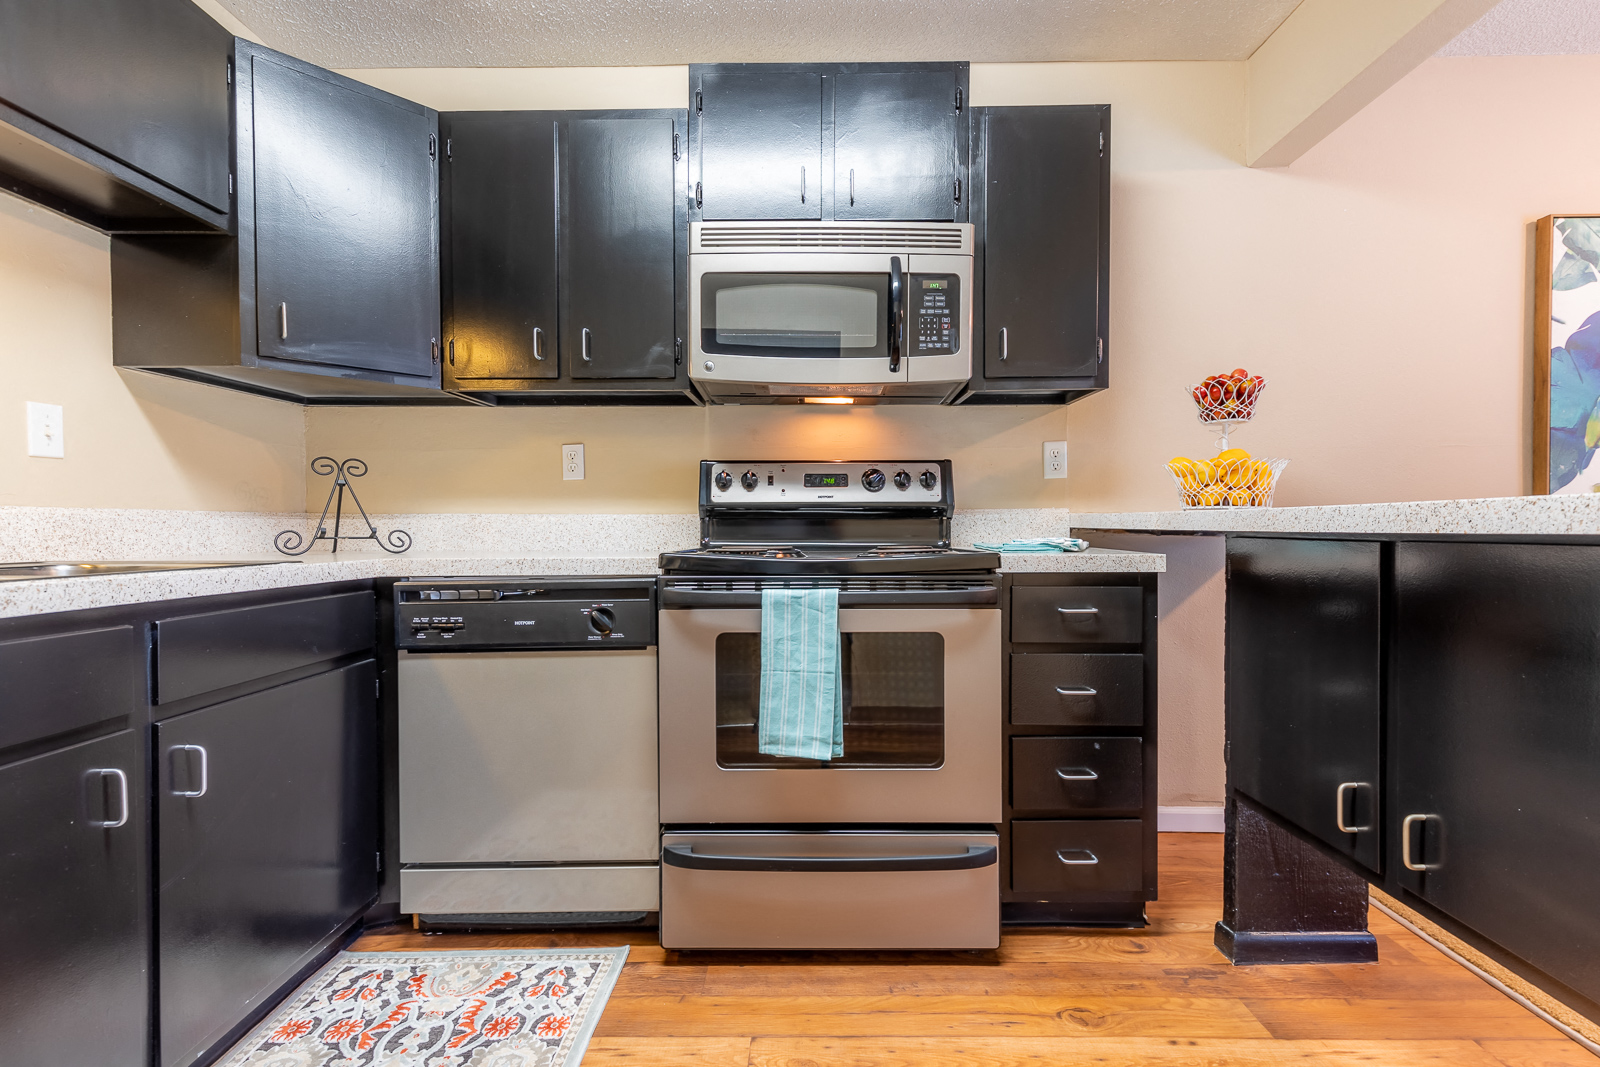 Kitchen with appliances and cabinetsat Preston Court Apartments, Kansas, 66212